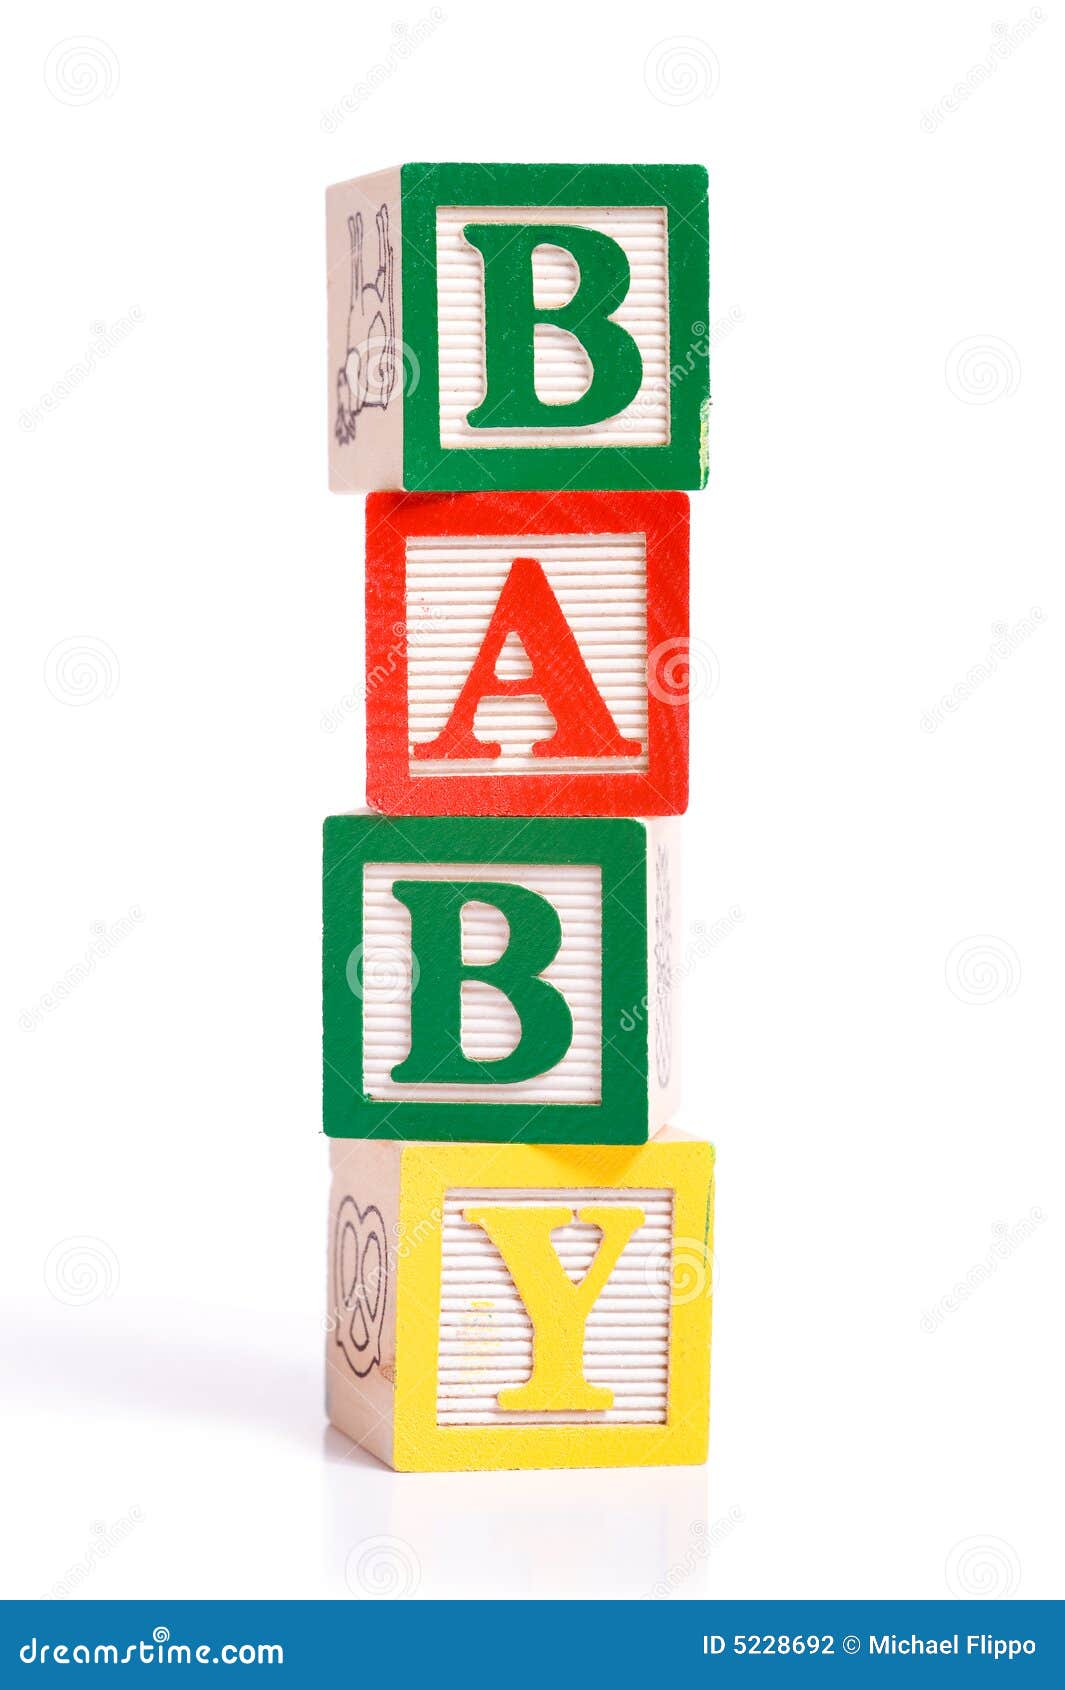 BABY Blocks Stock Photography - Image: 5228692